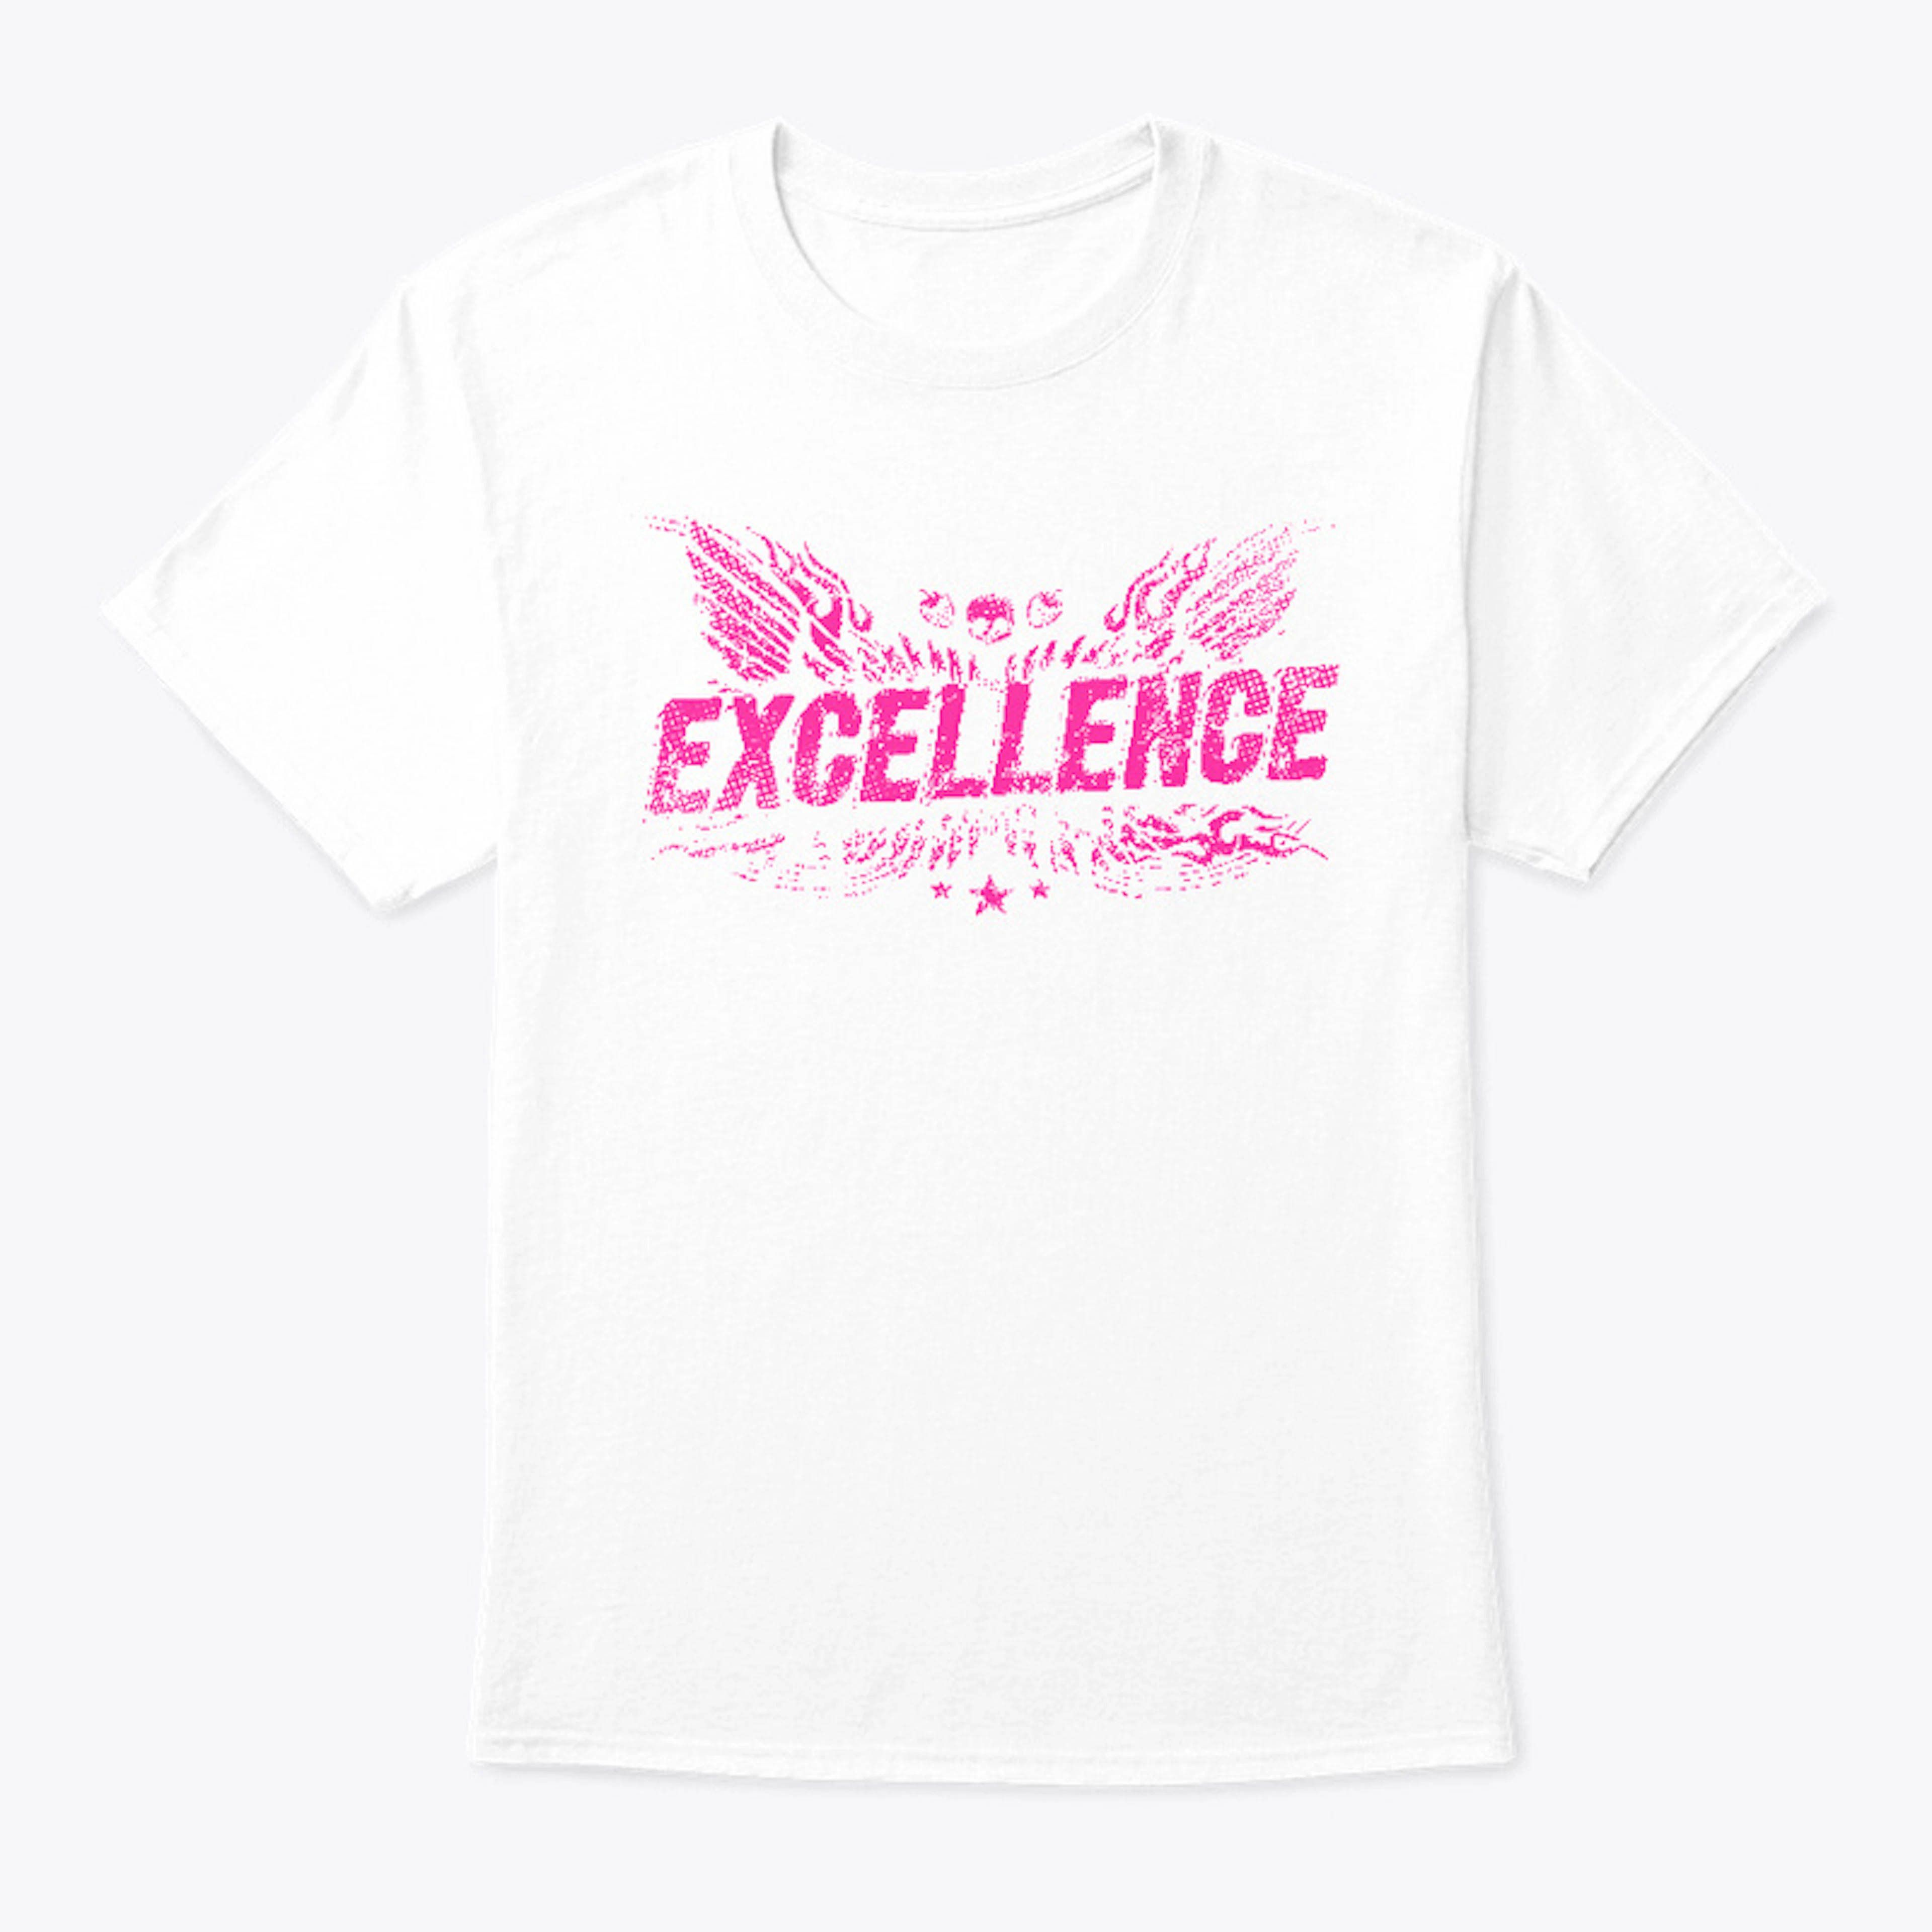 Excellence (White Variant)